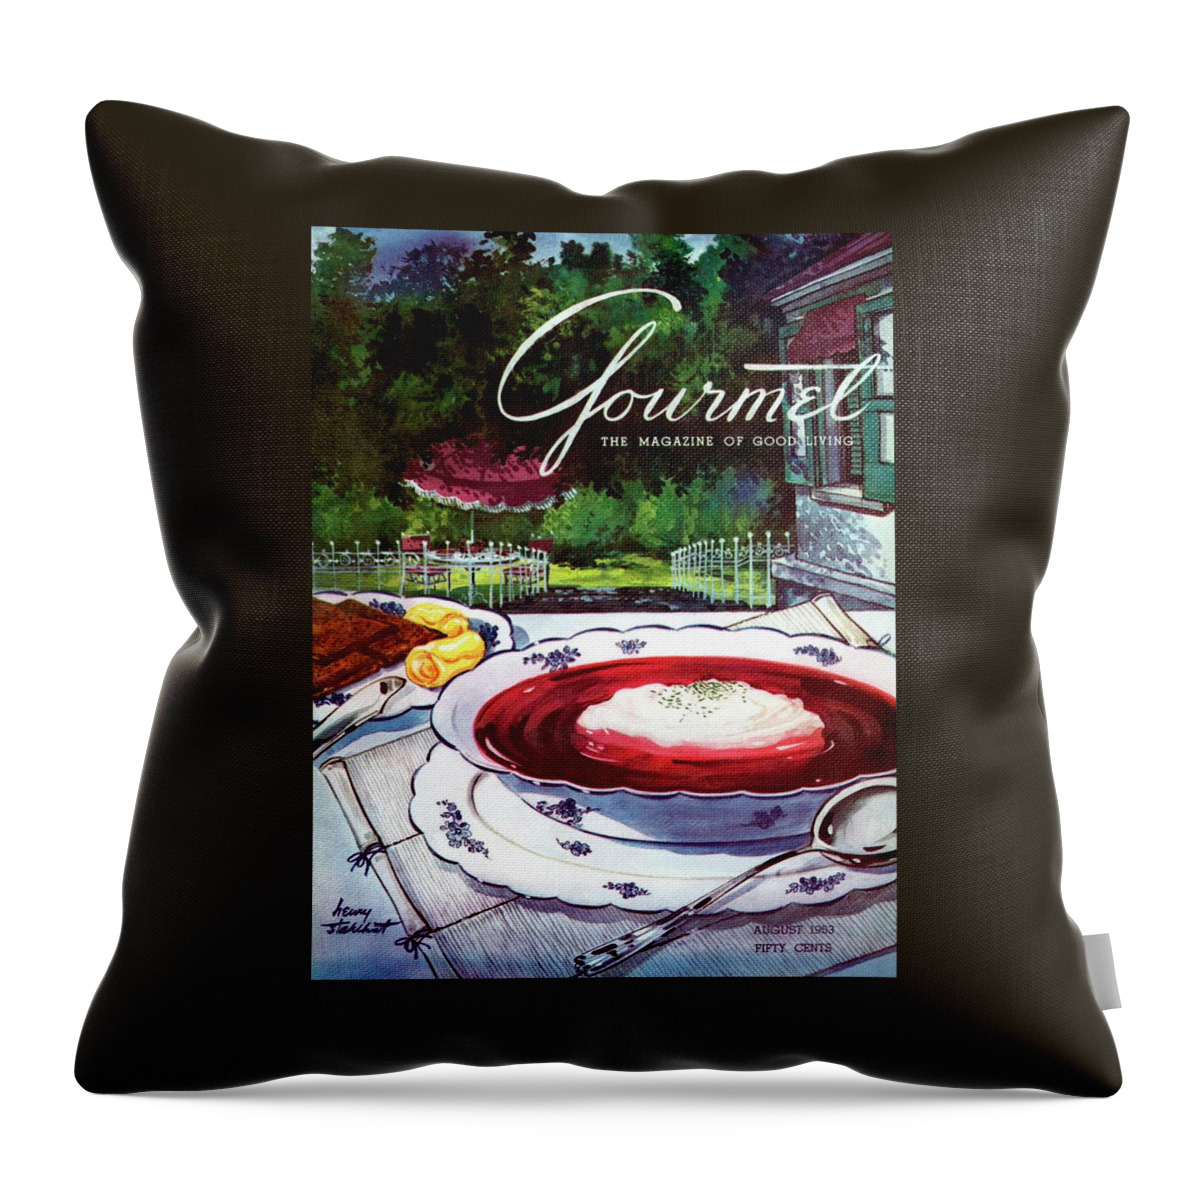 Gourmet Cover Featuring A Bowl Of Borsch Throw Pillow